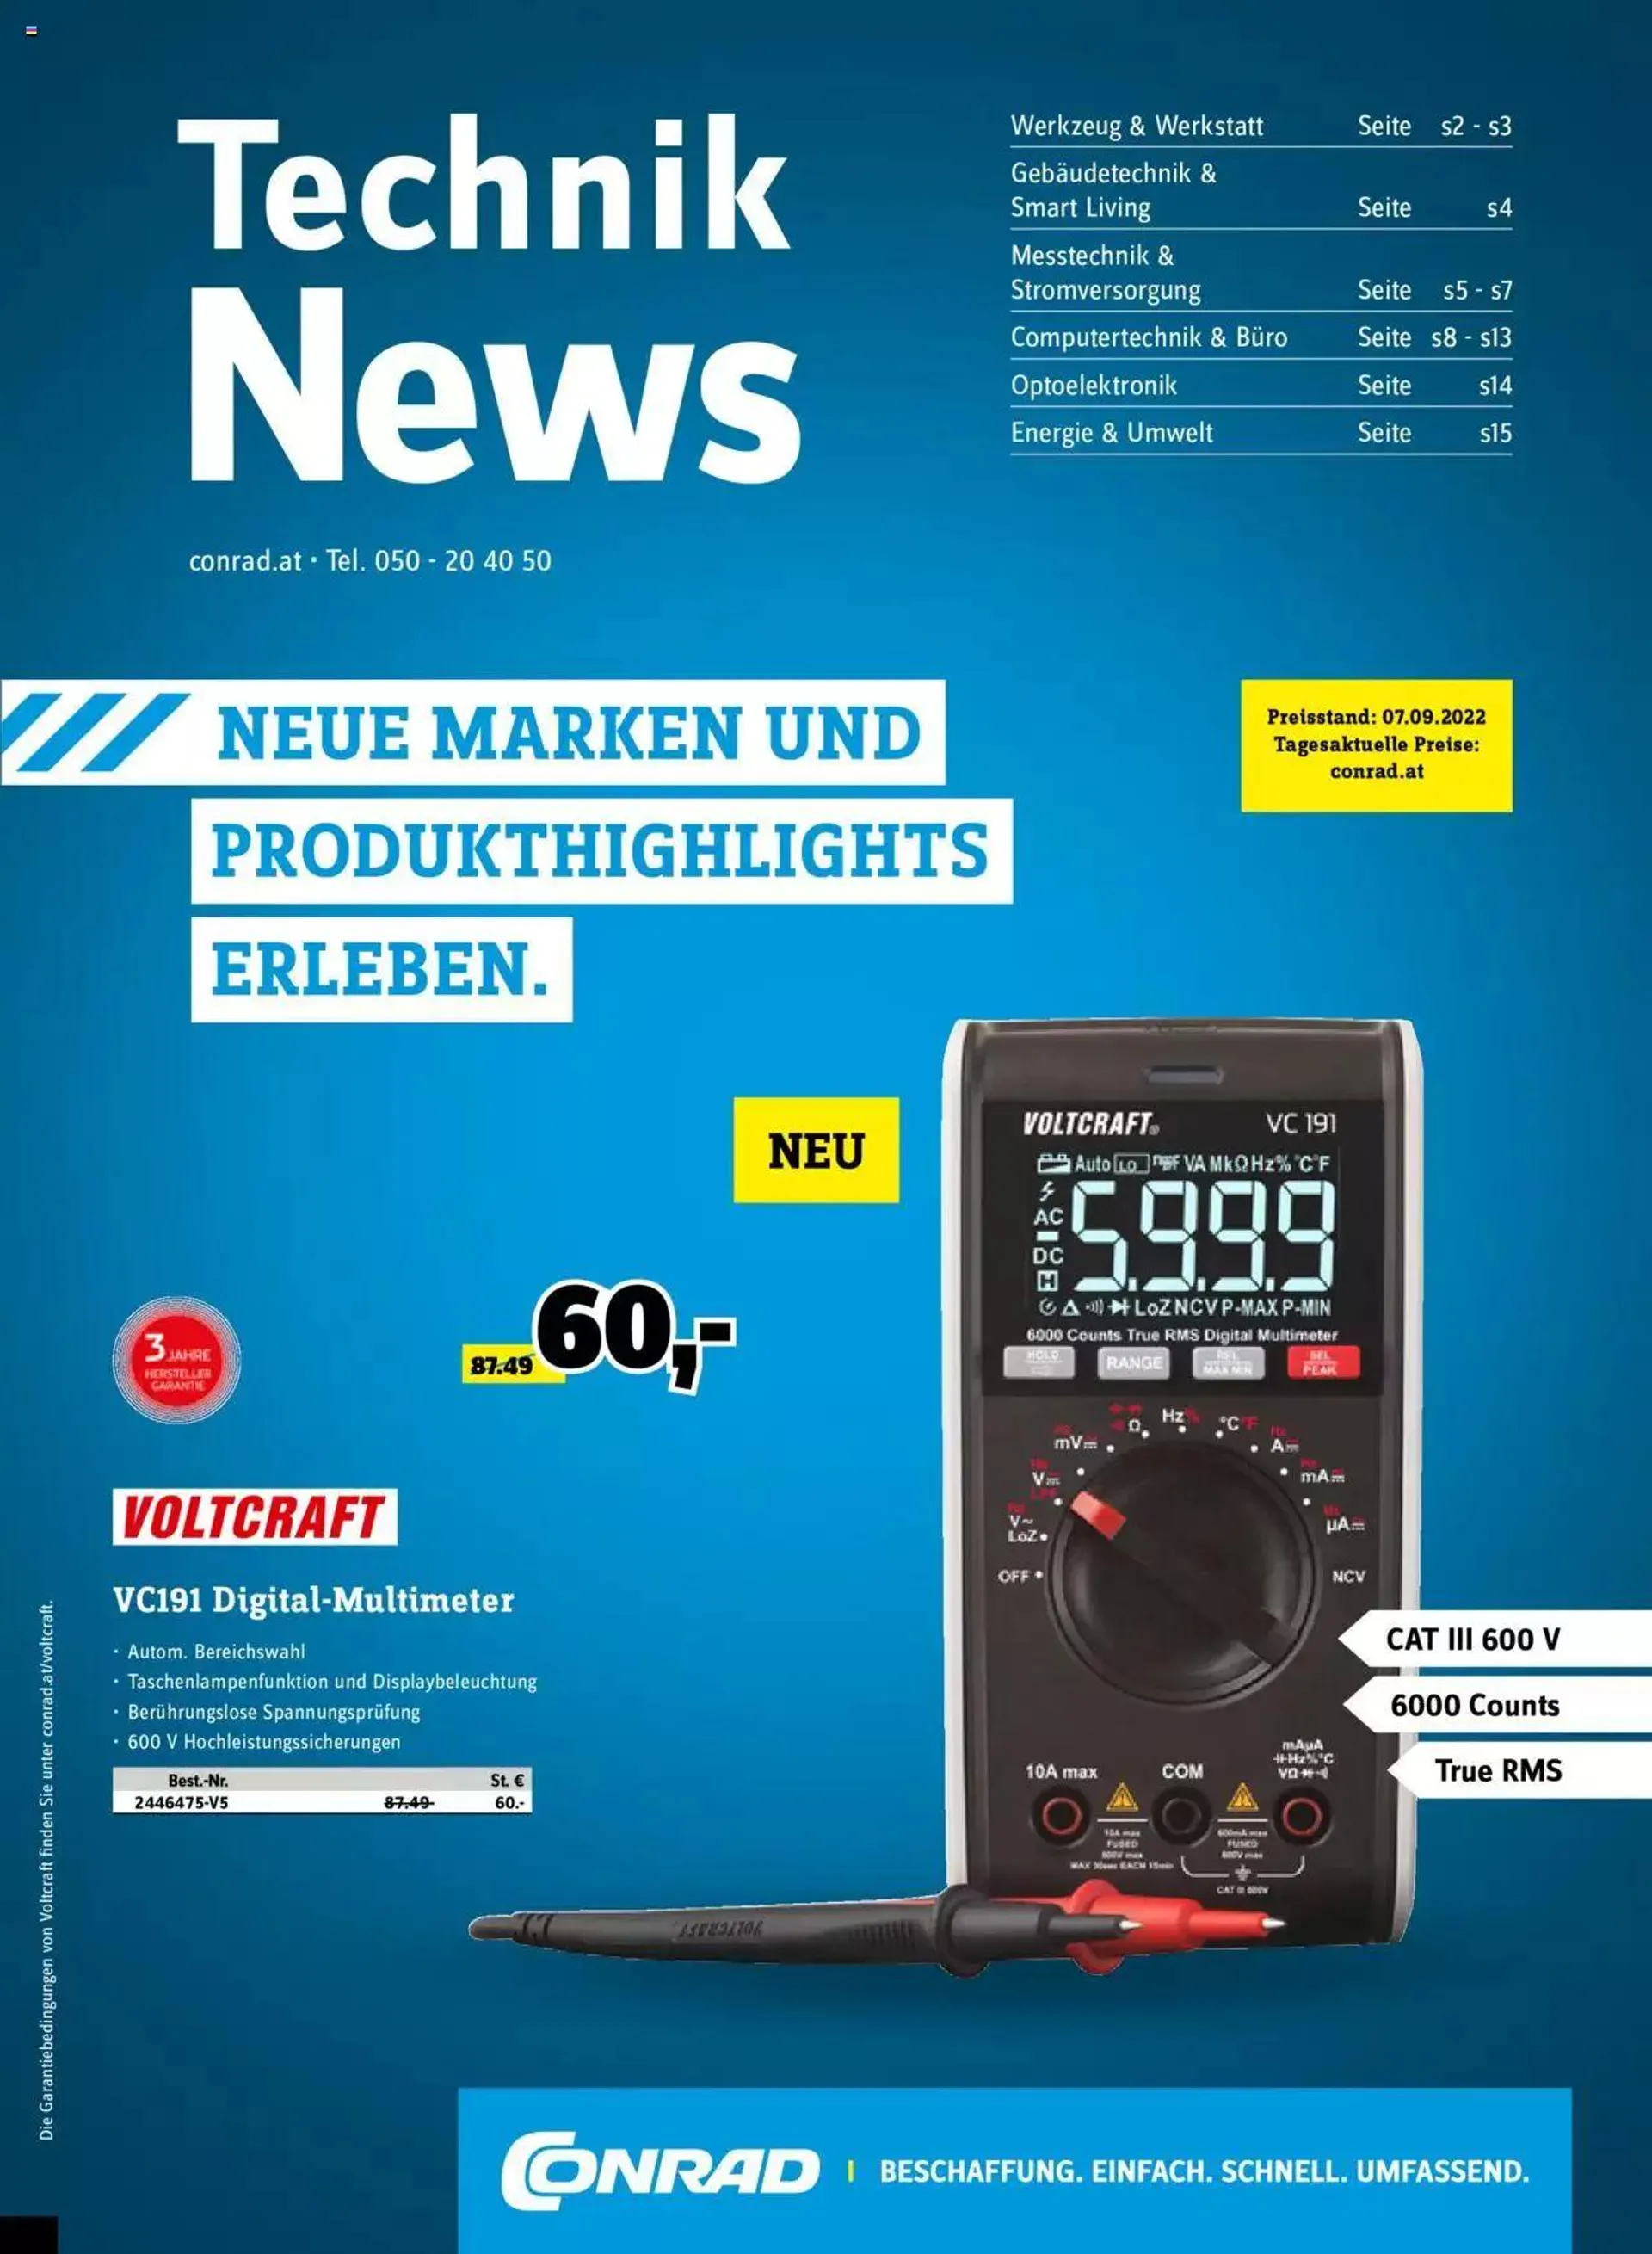 Conrad - Technik News 04/2022 - 0